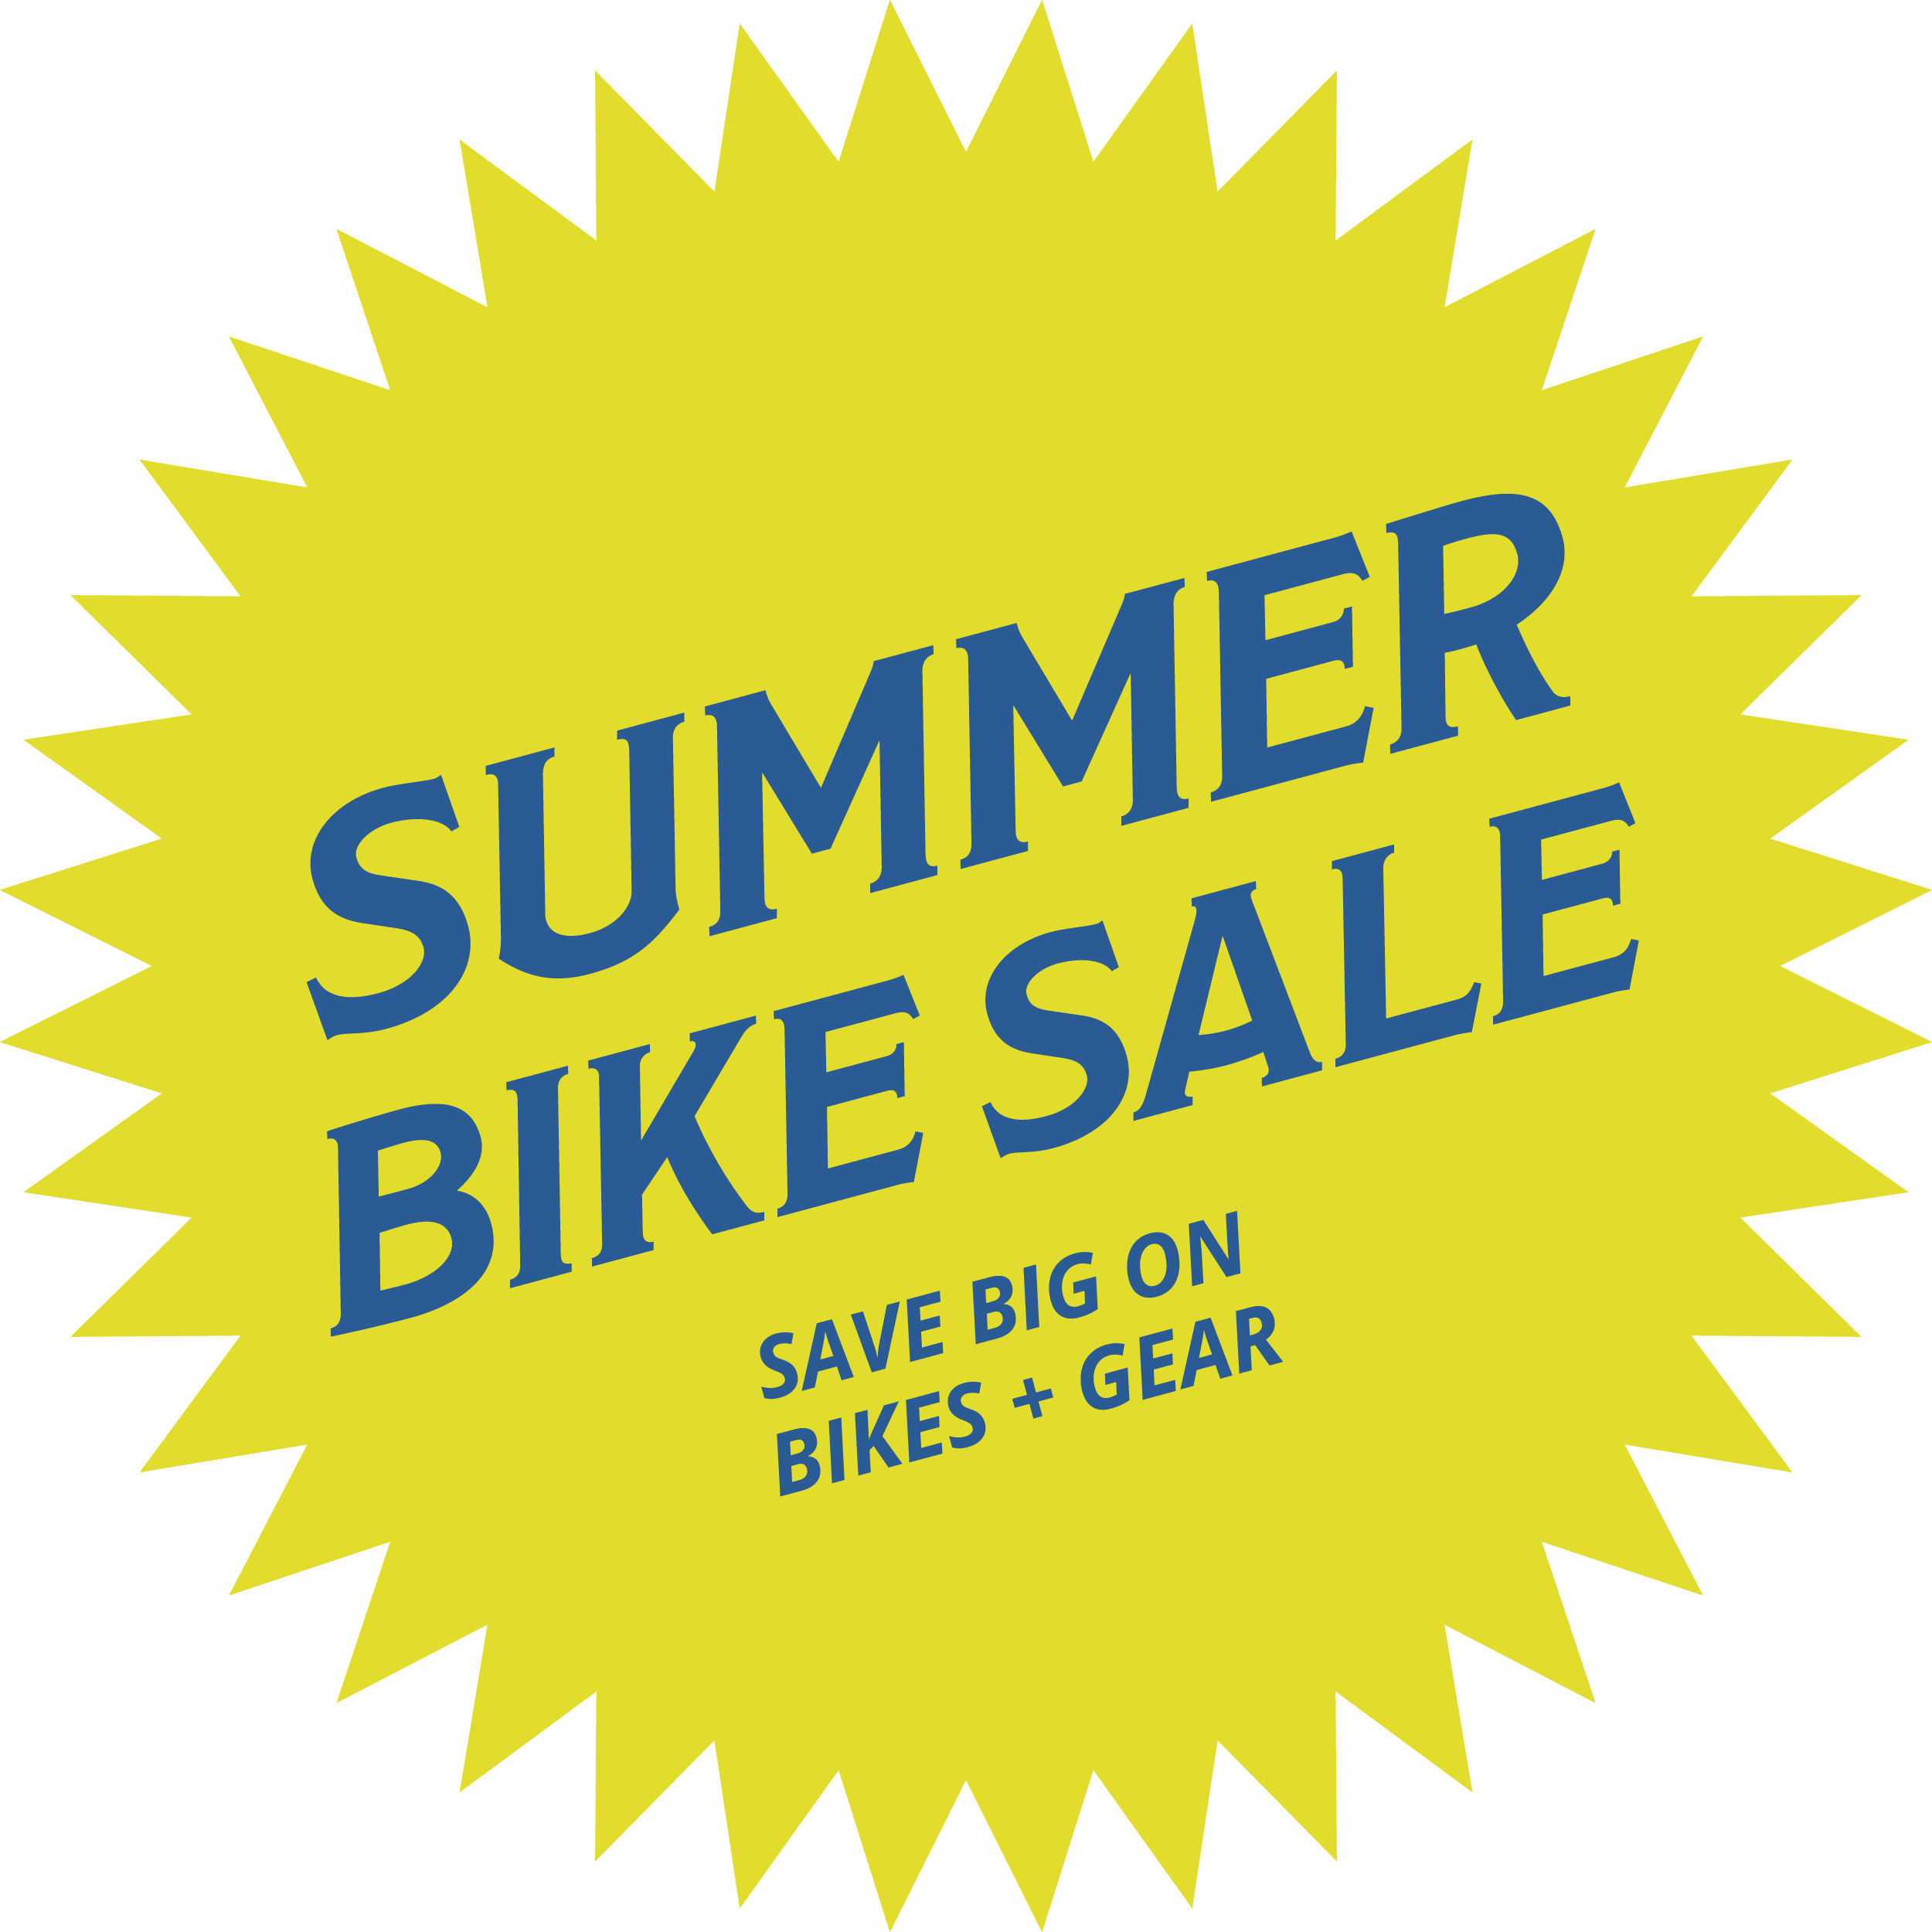 Summer Bike Sale - Save Bigs On Bikes & Gear